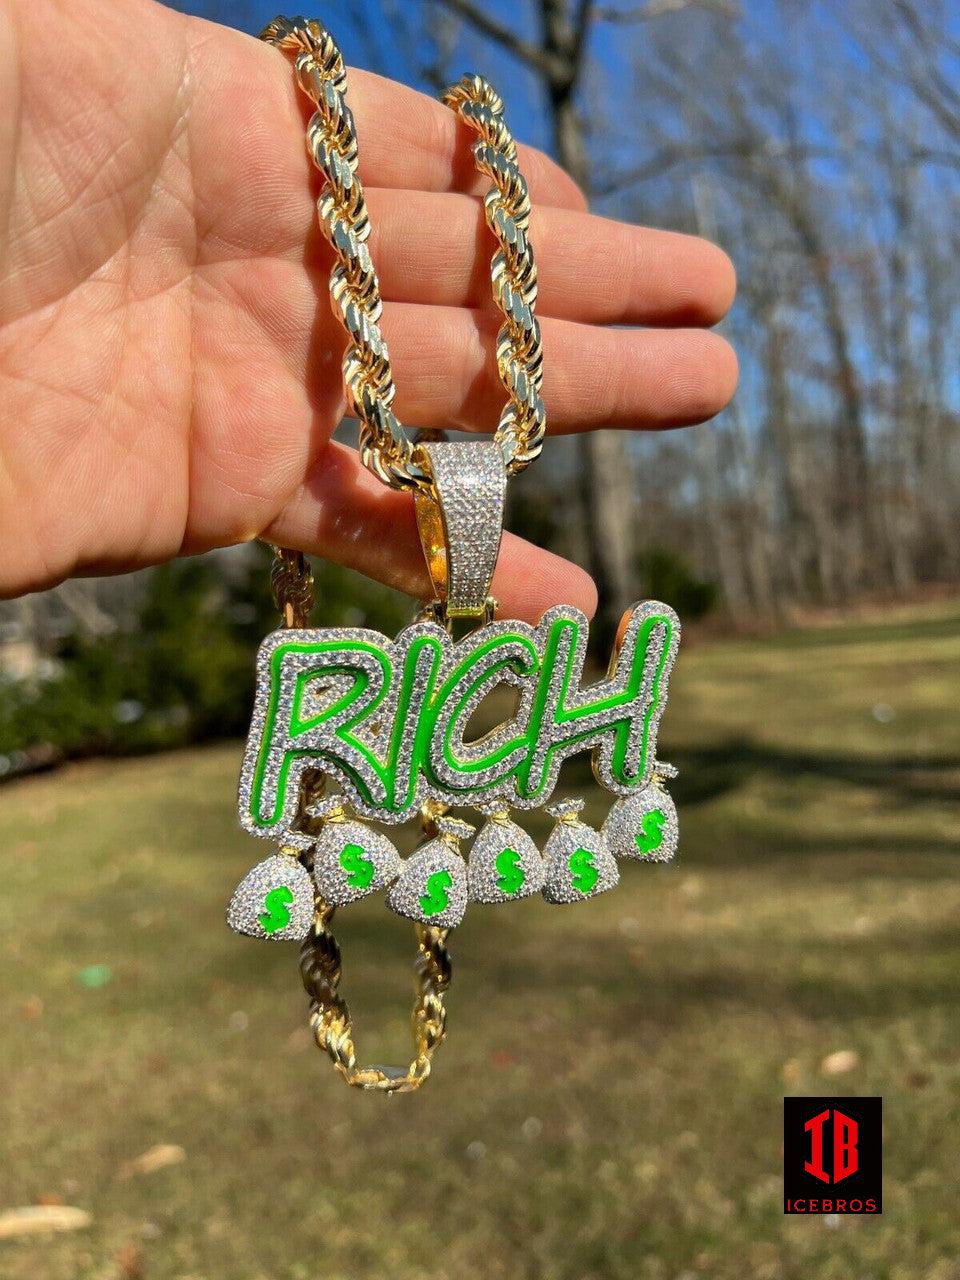 Green Silver Gold Glows In Dark RICH Money Bag $ Big Hip Hop Pendant Necklace